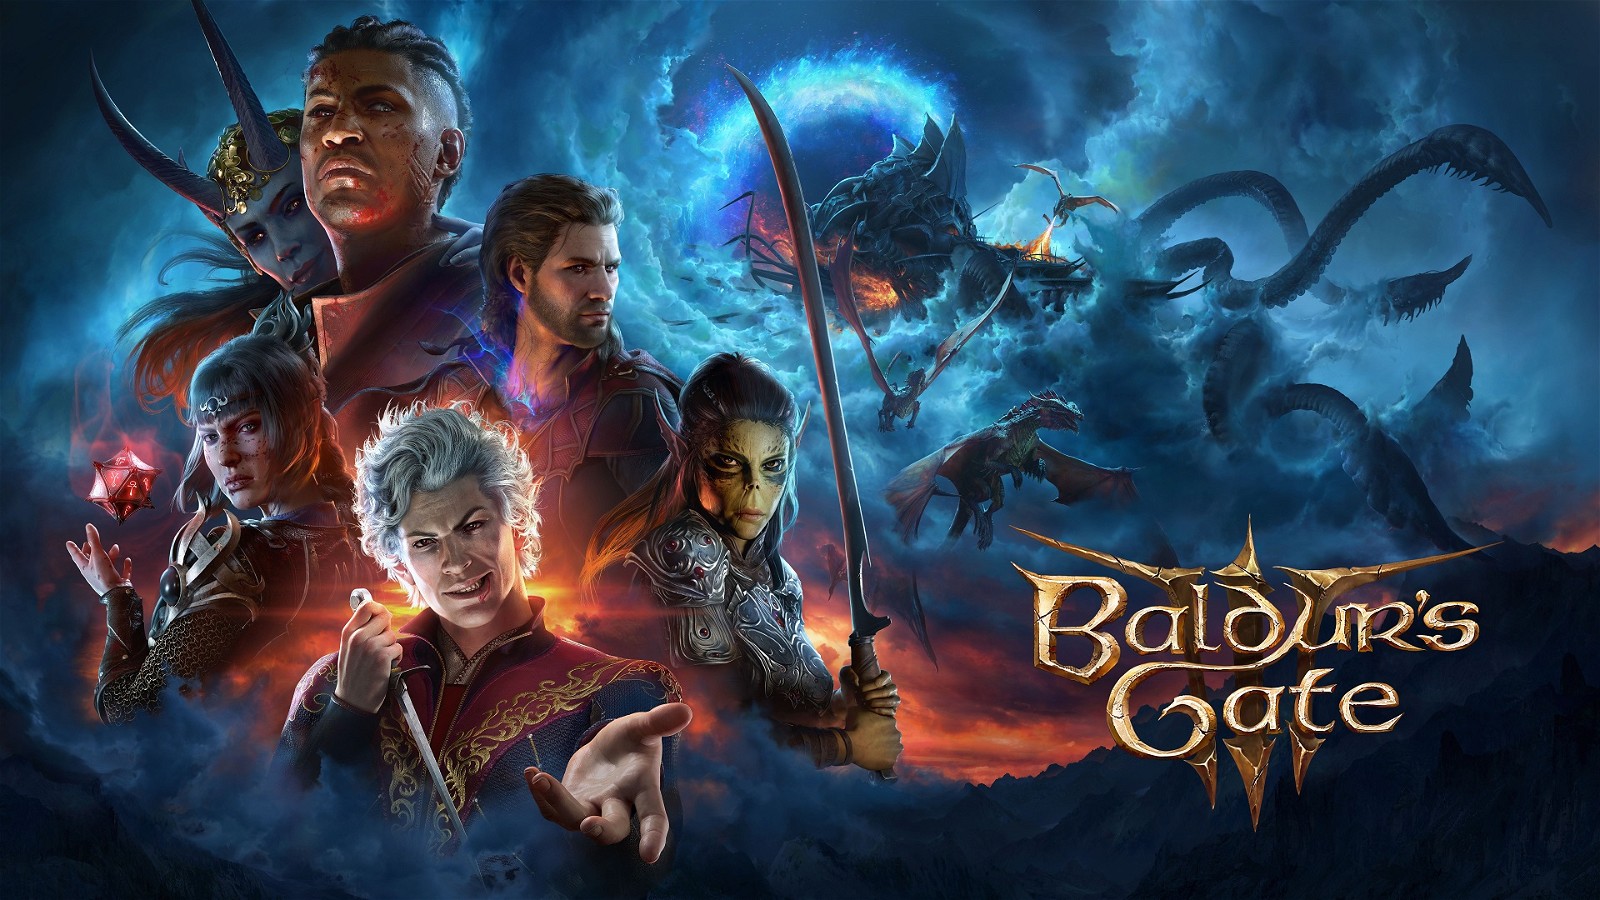 Baldur's Gate 3, the latest game by Larian Studios 